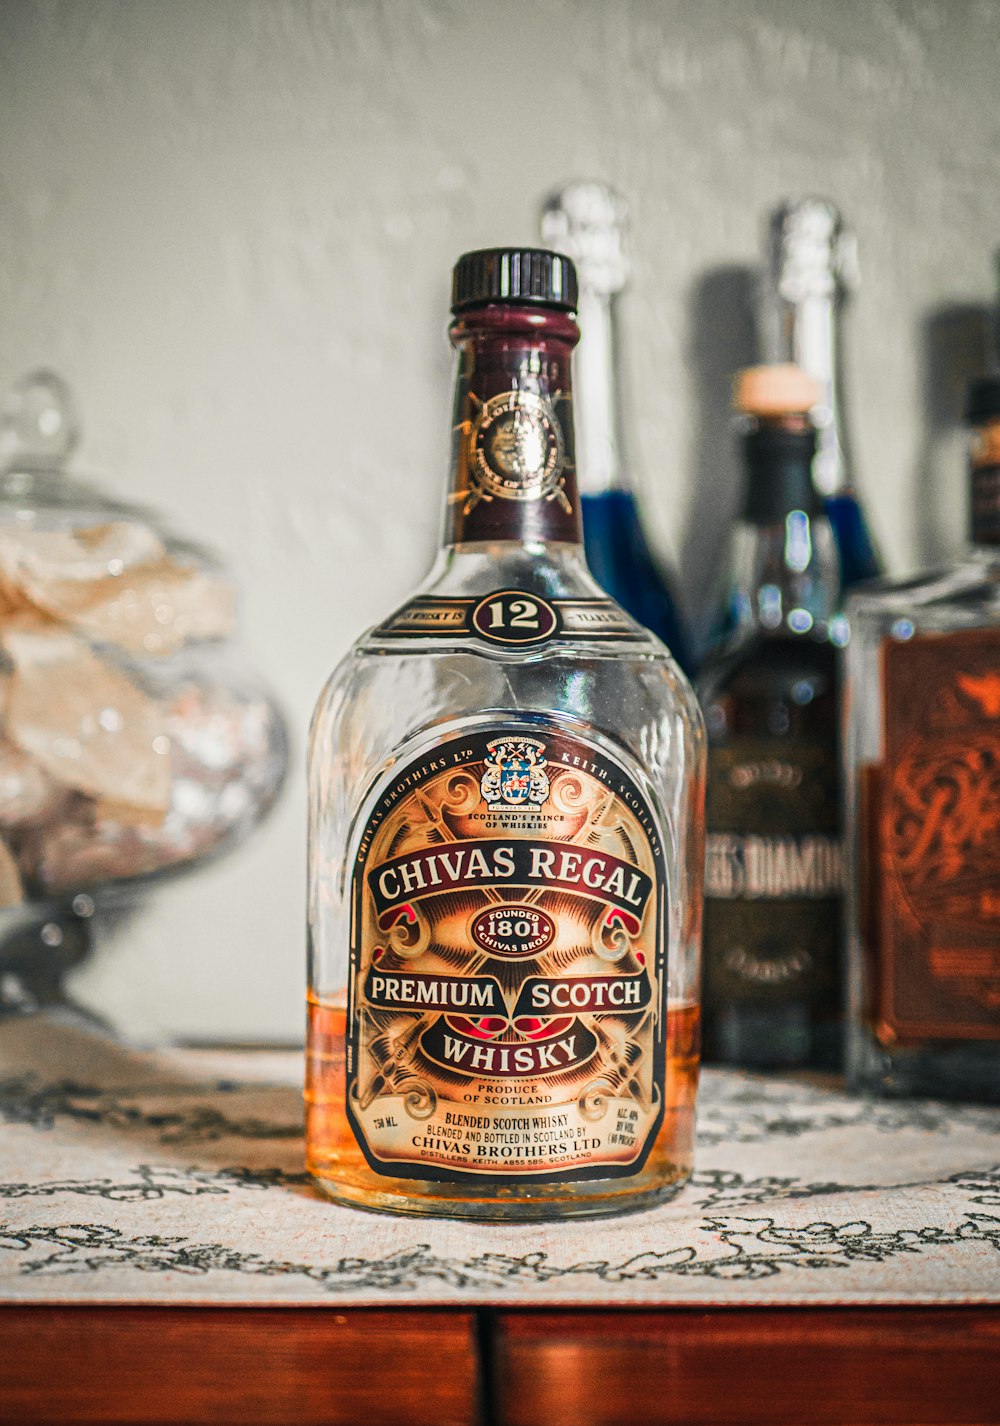 Chivas Regal premium Scotch Whisky